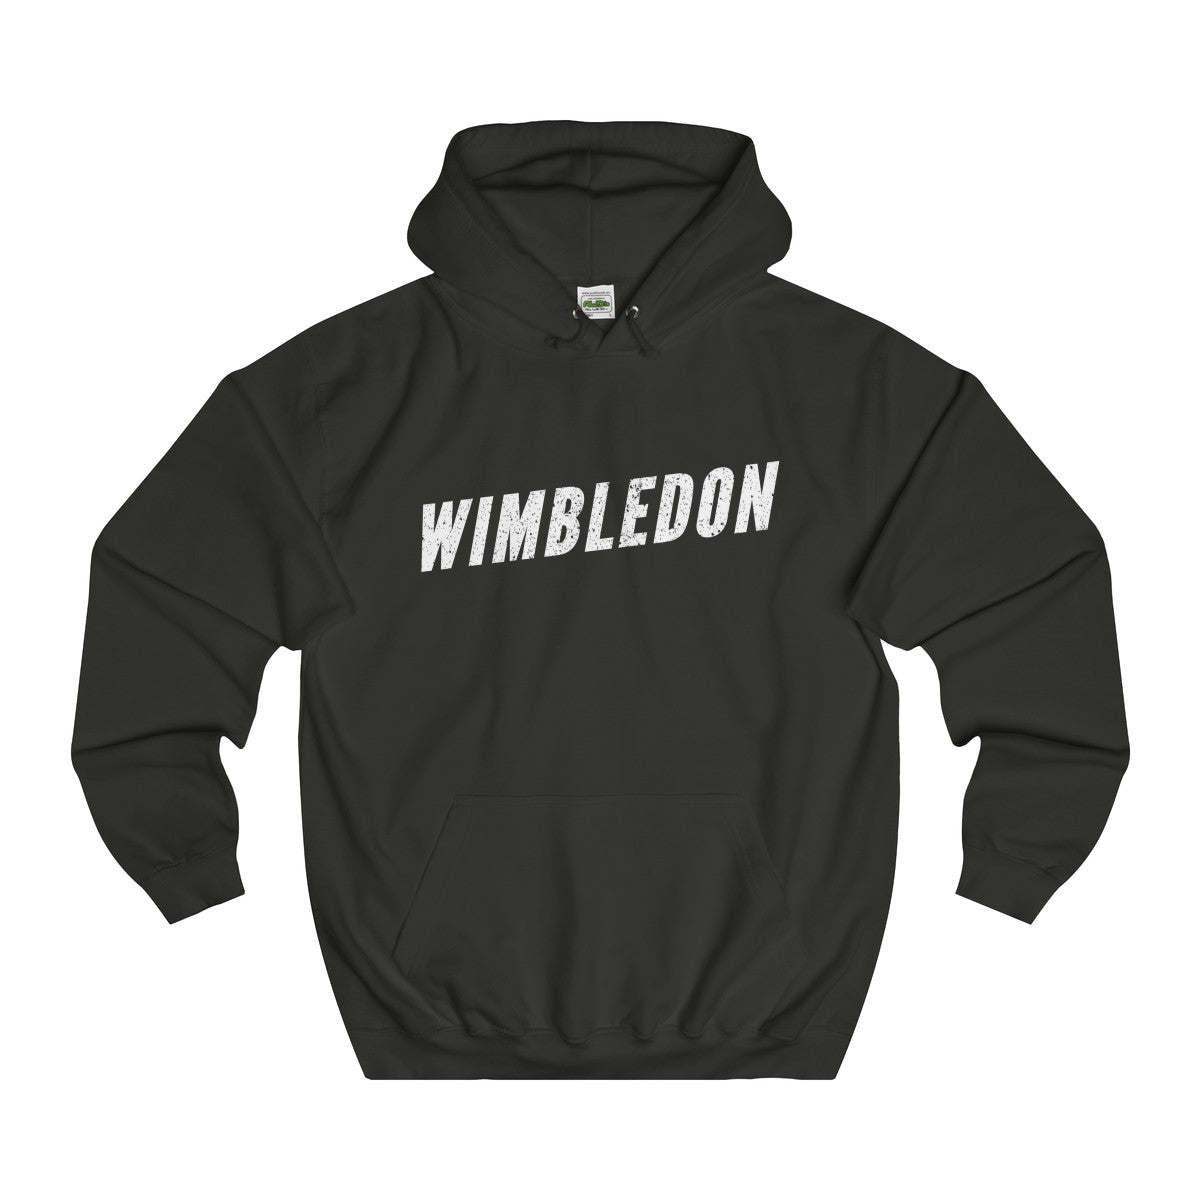 Wimbledon Hoodie